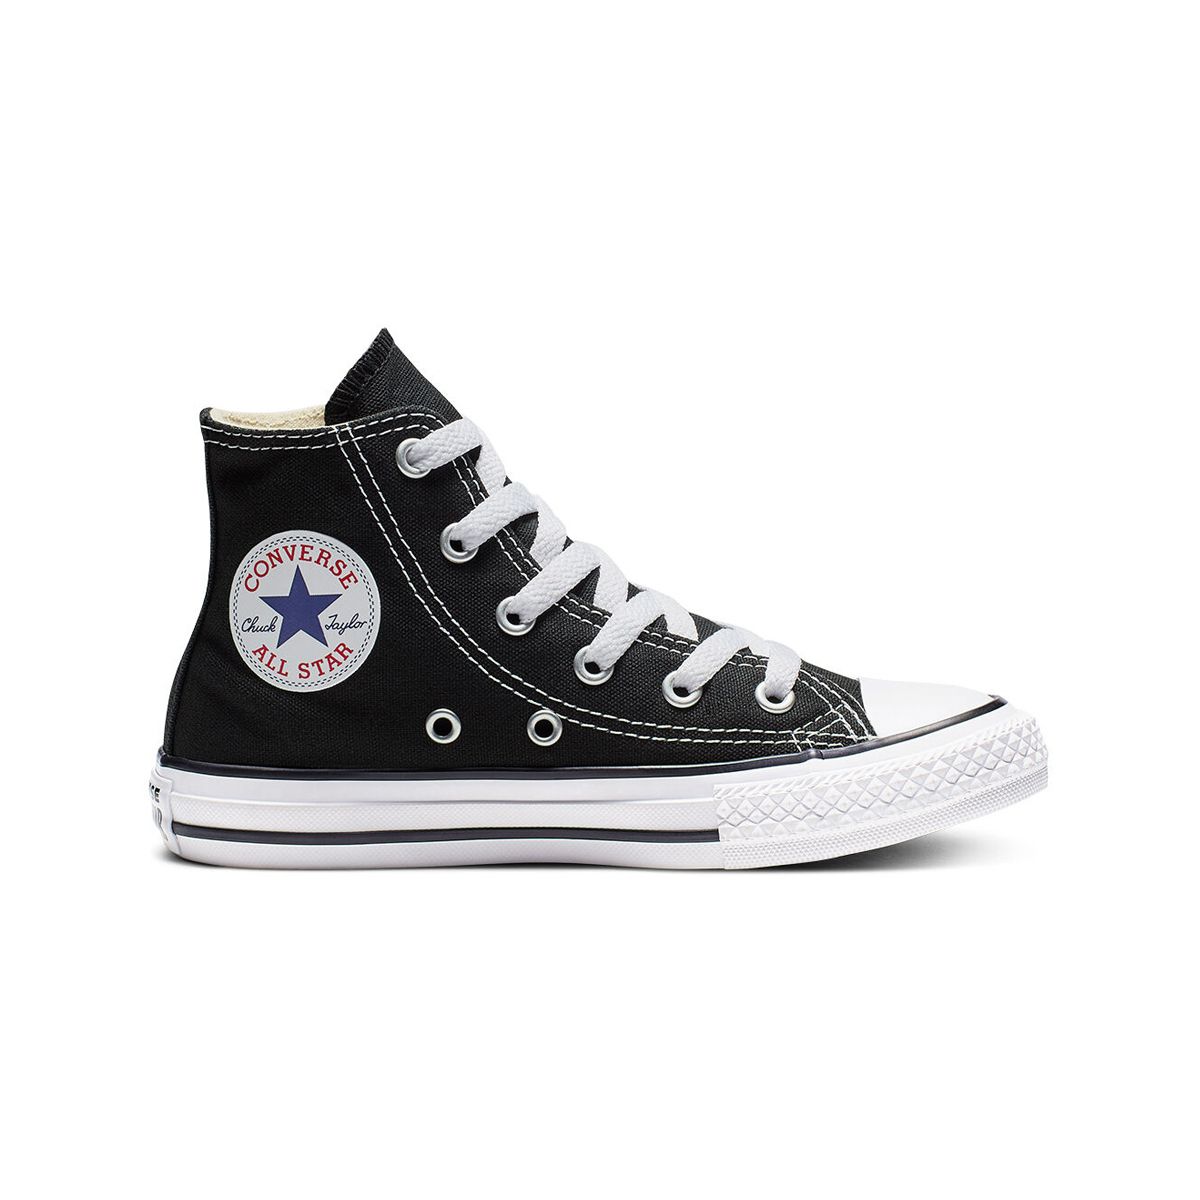 Converse Chuck Taylor All Star High Top Kid's Shoe 3J231C